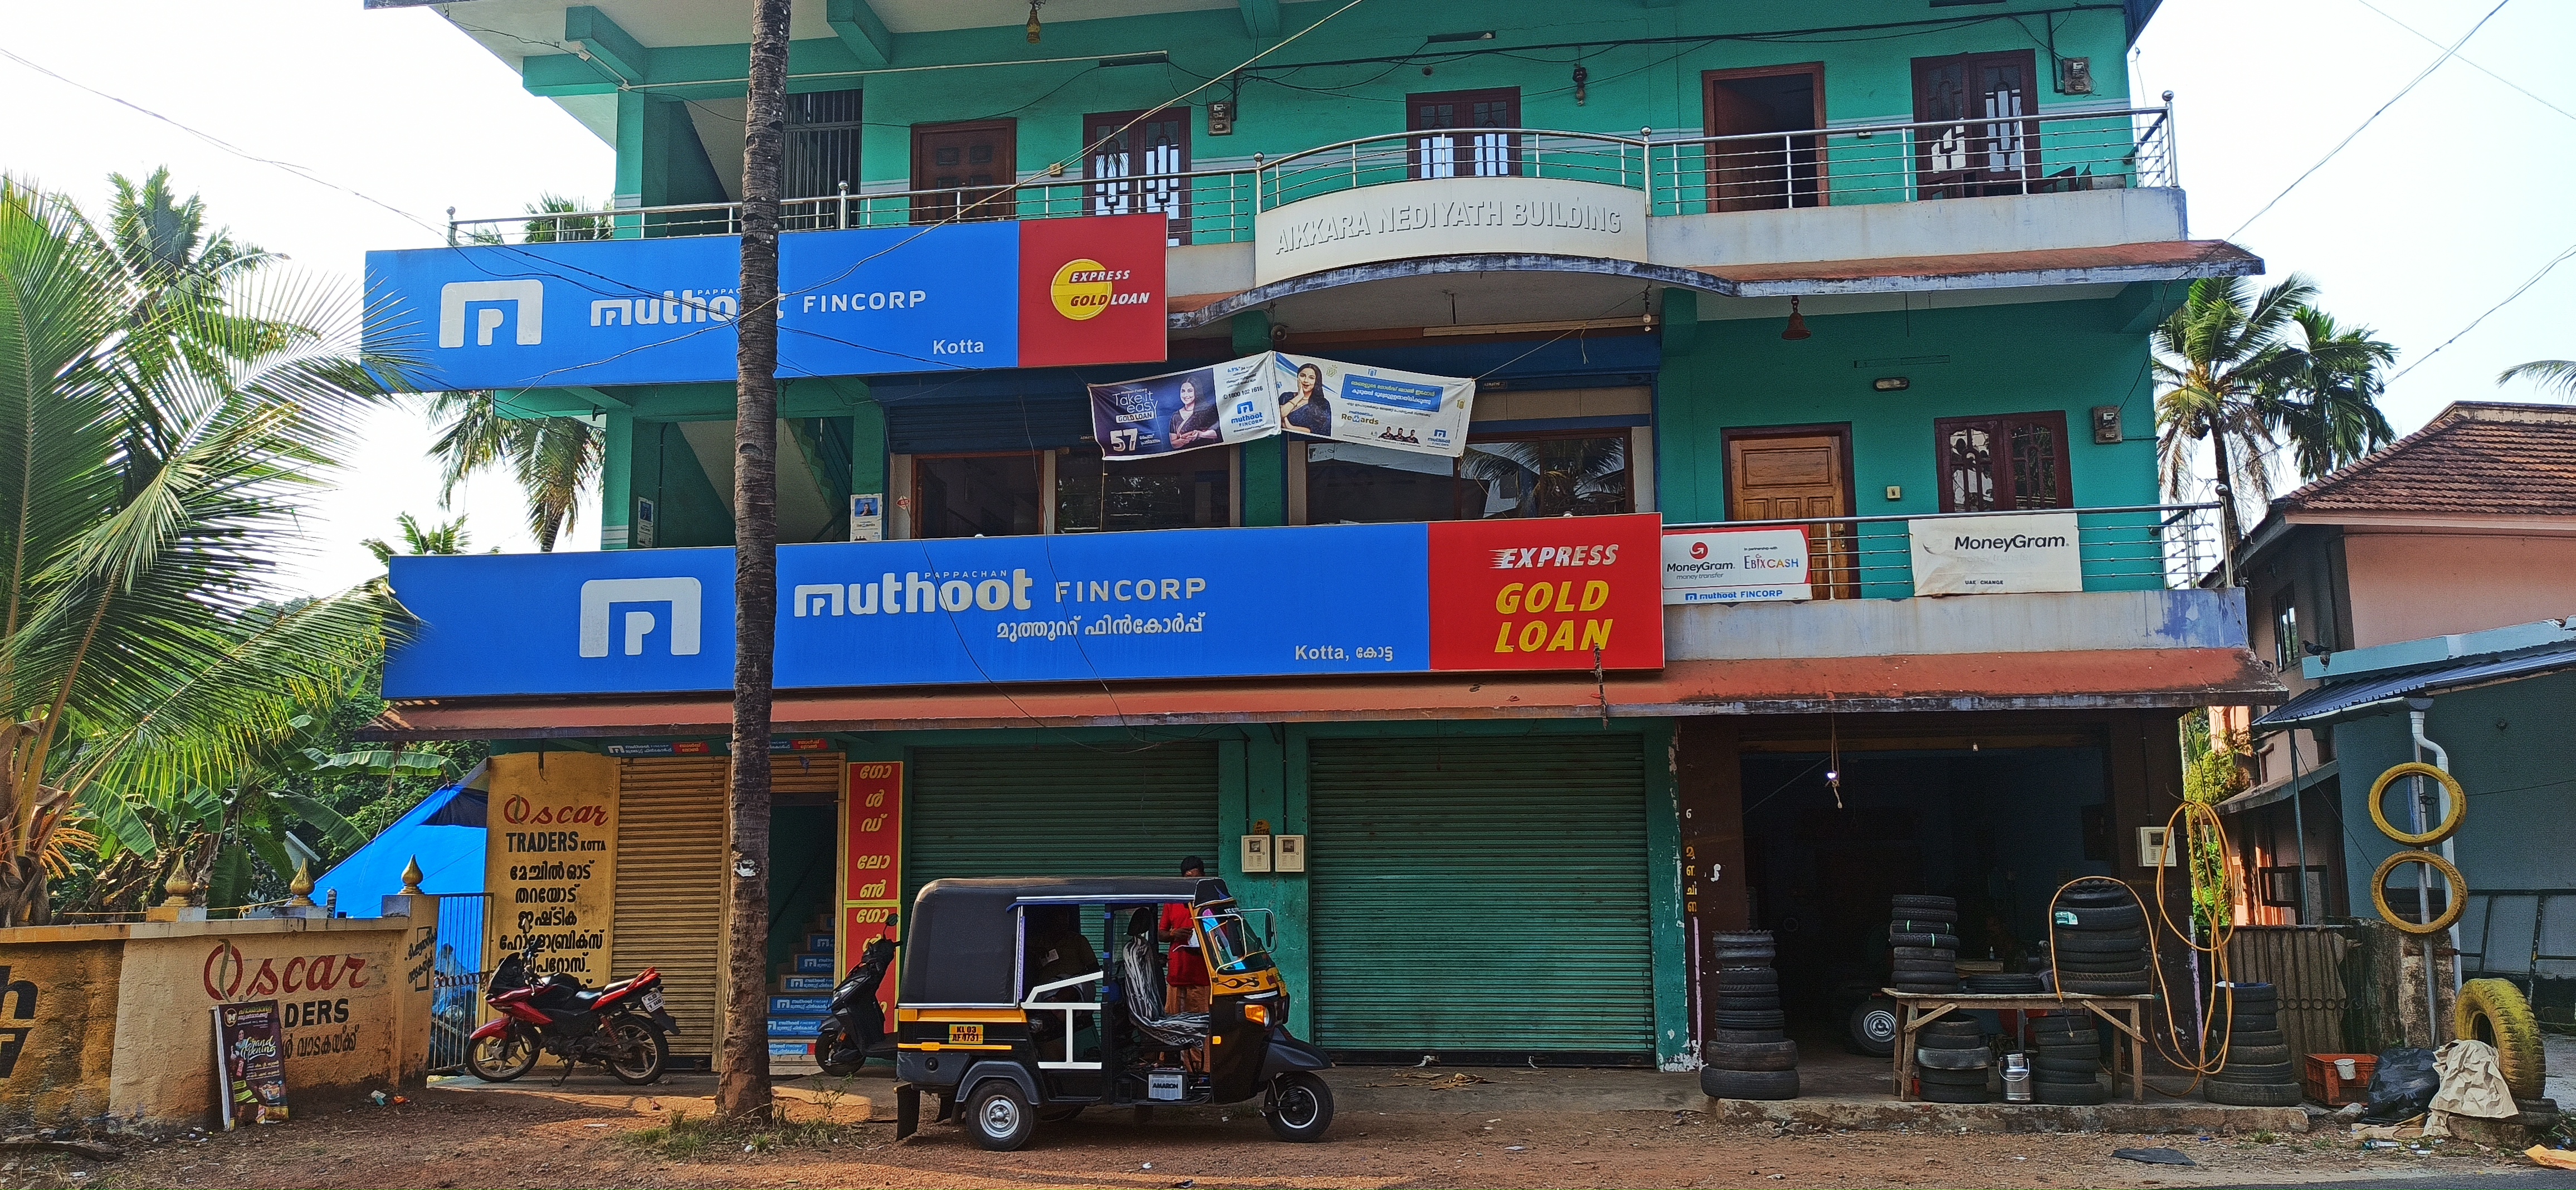 Muthoot Fincorp Gold Loan Services in Pathanamthitta, Alappuzha, Kerala